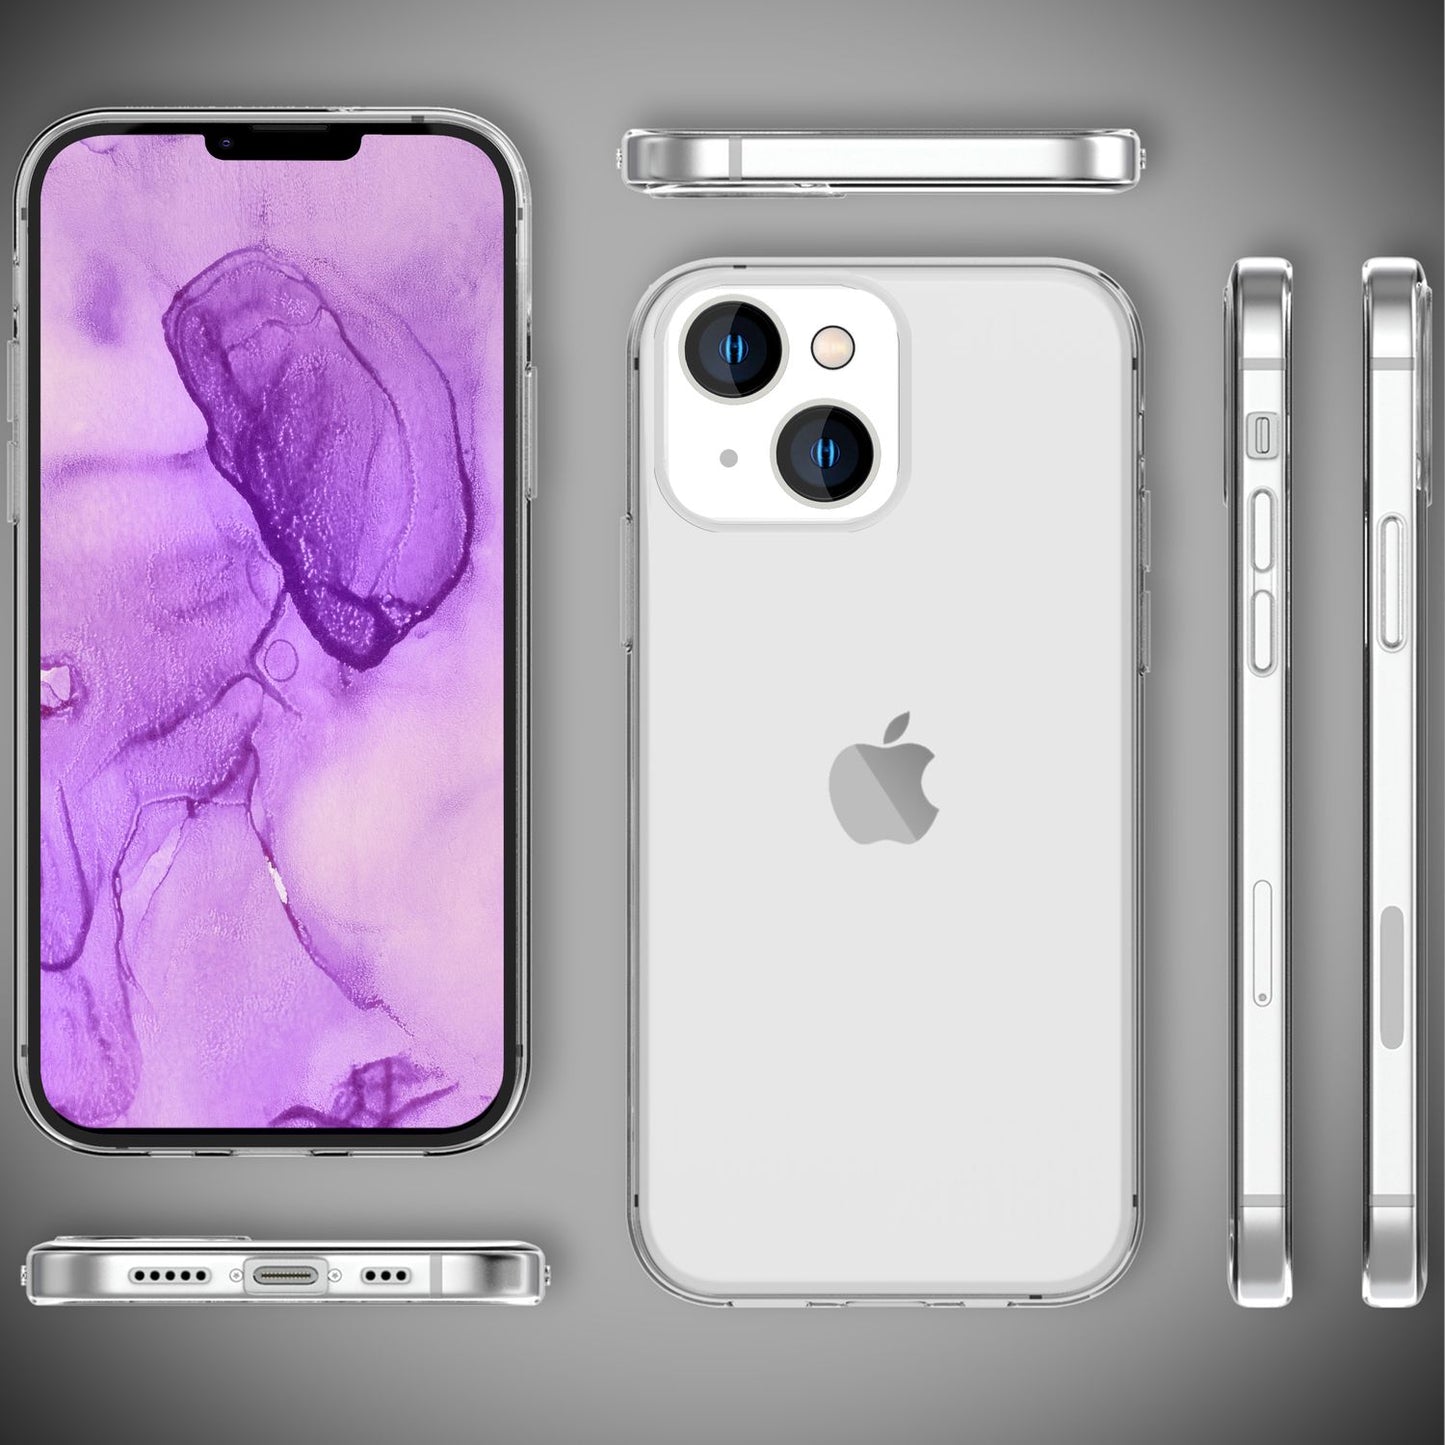 360° Hülle für iPhone 14 - Klar Transparent Full Cover Case Display Schutz Etui